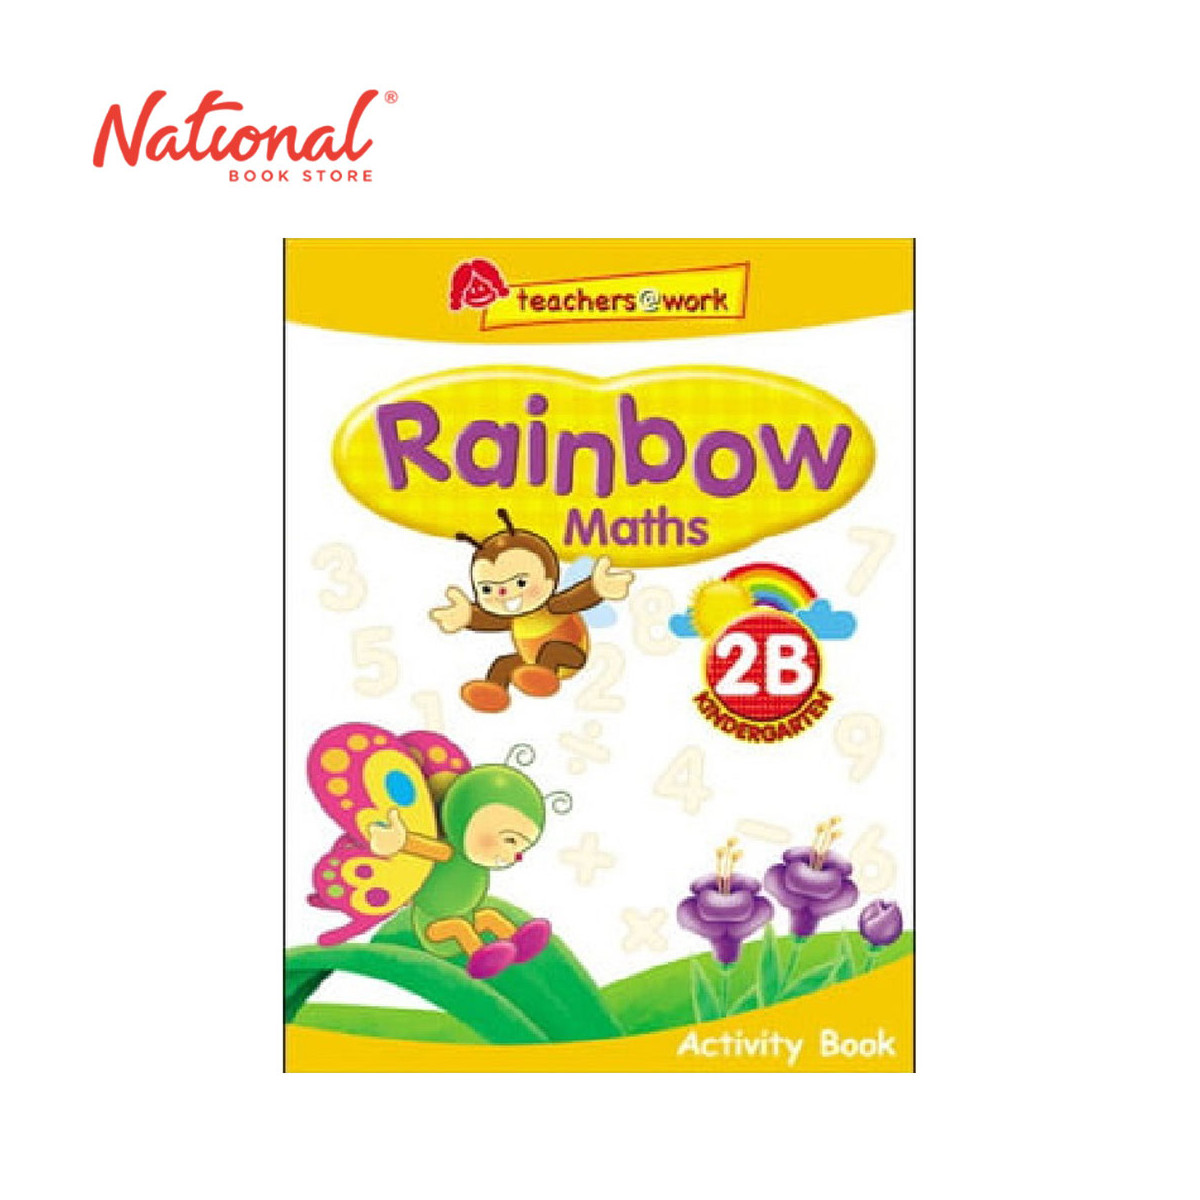 Rainbow Maths Activity Book Kindergarten 2B by Chattryn Sonata - Trade Paperback - Elementary